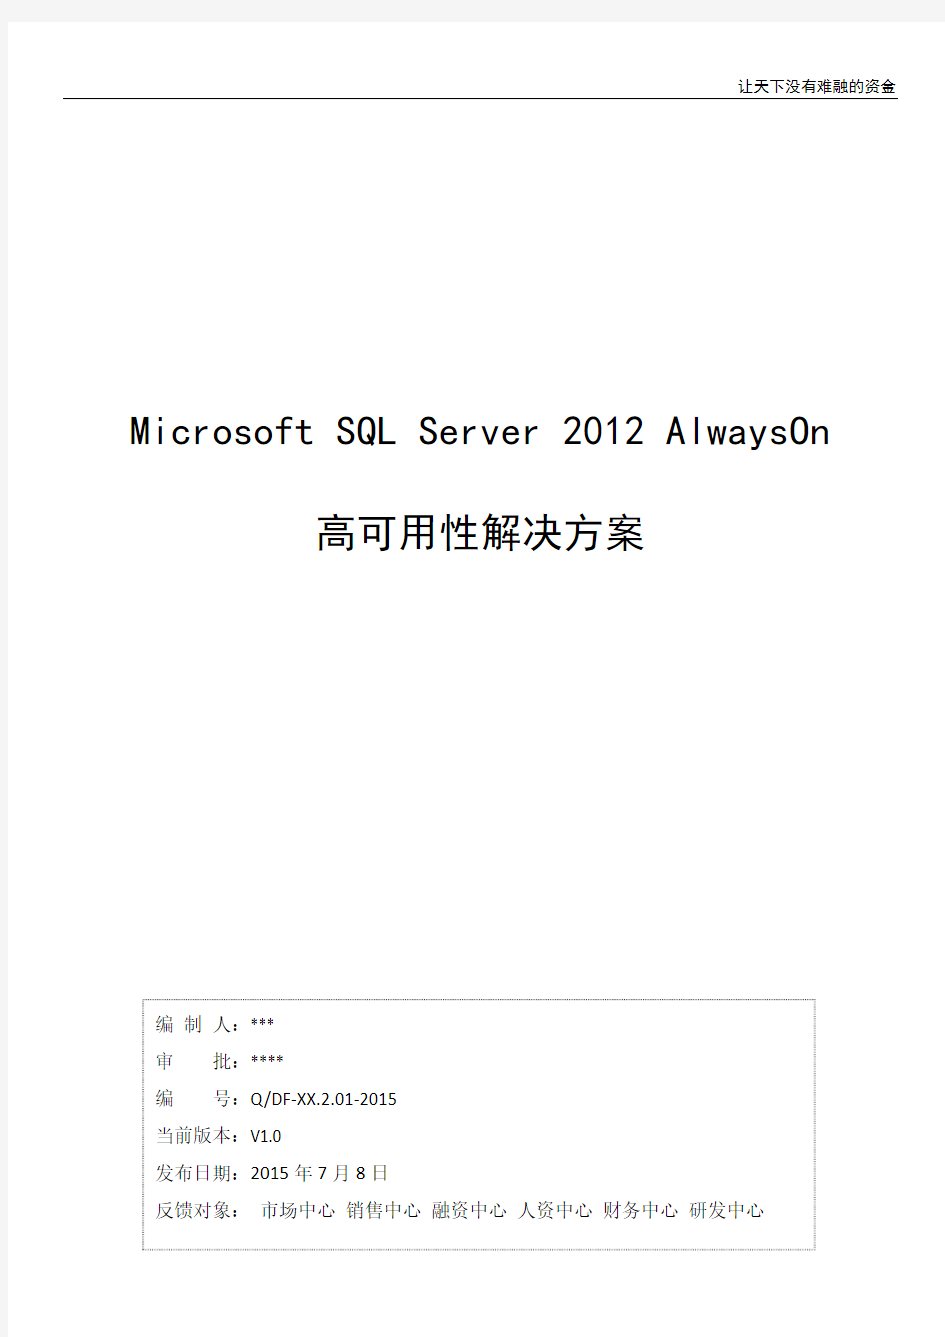 SQL Server 2012 AlwaysOn高可用性解决方案